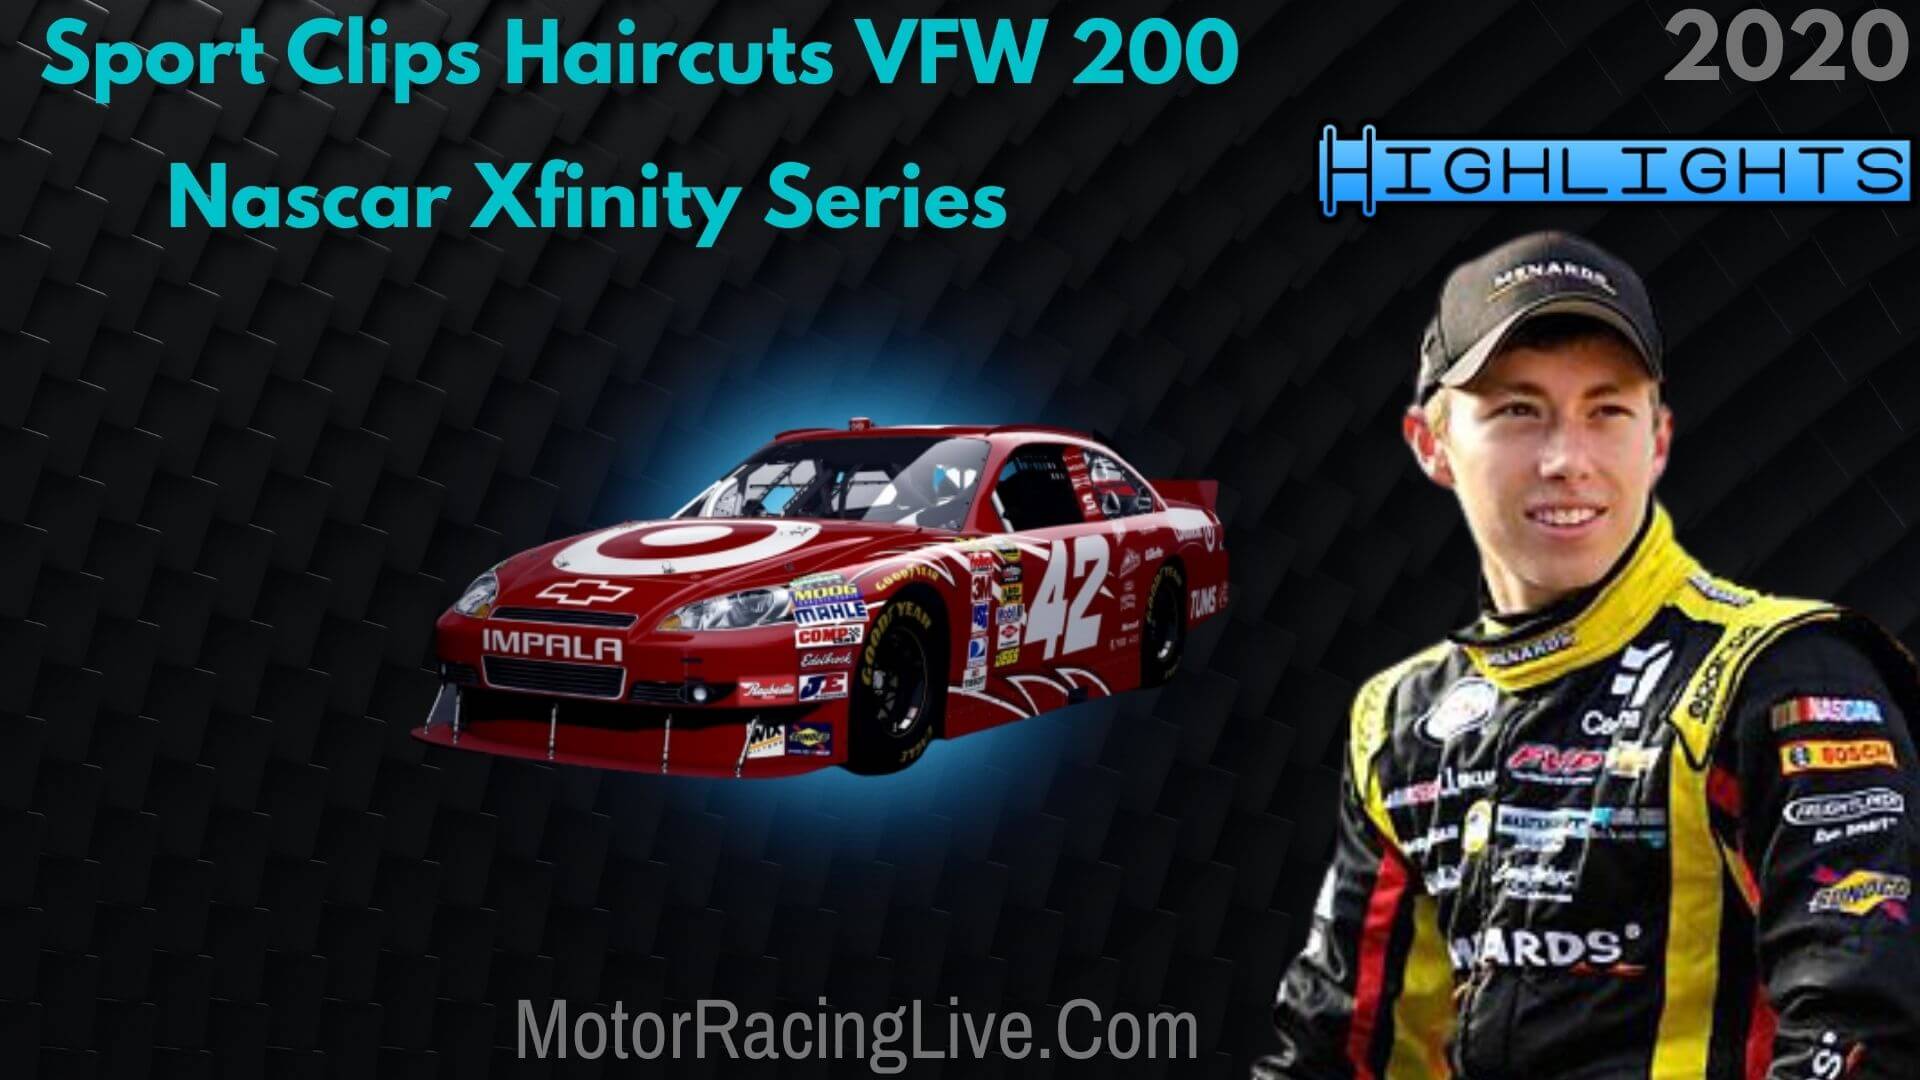 Sport Clips Haircuts VFW 200 Highlights Xfinity Series 2020